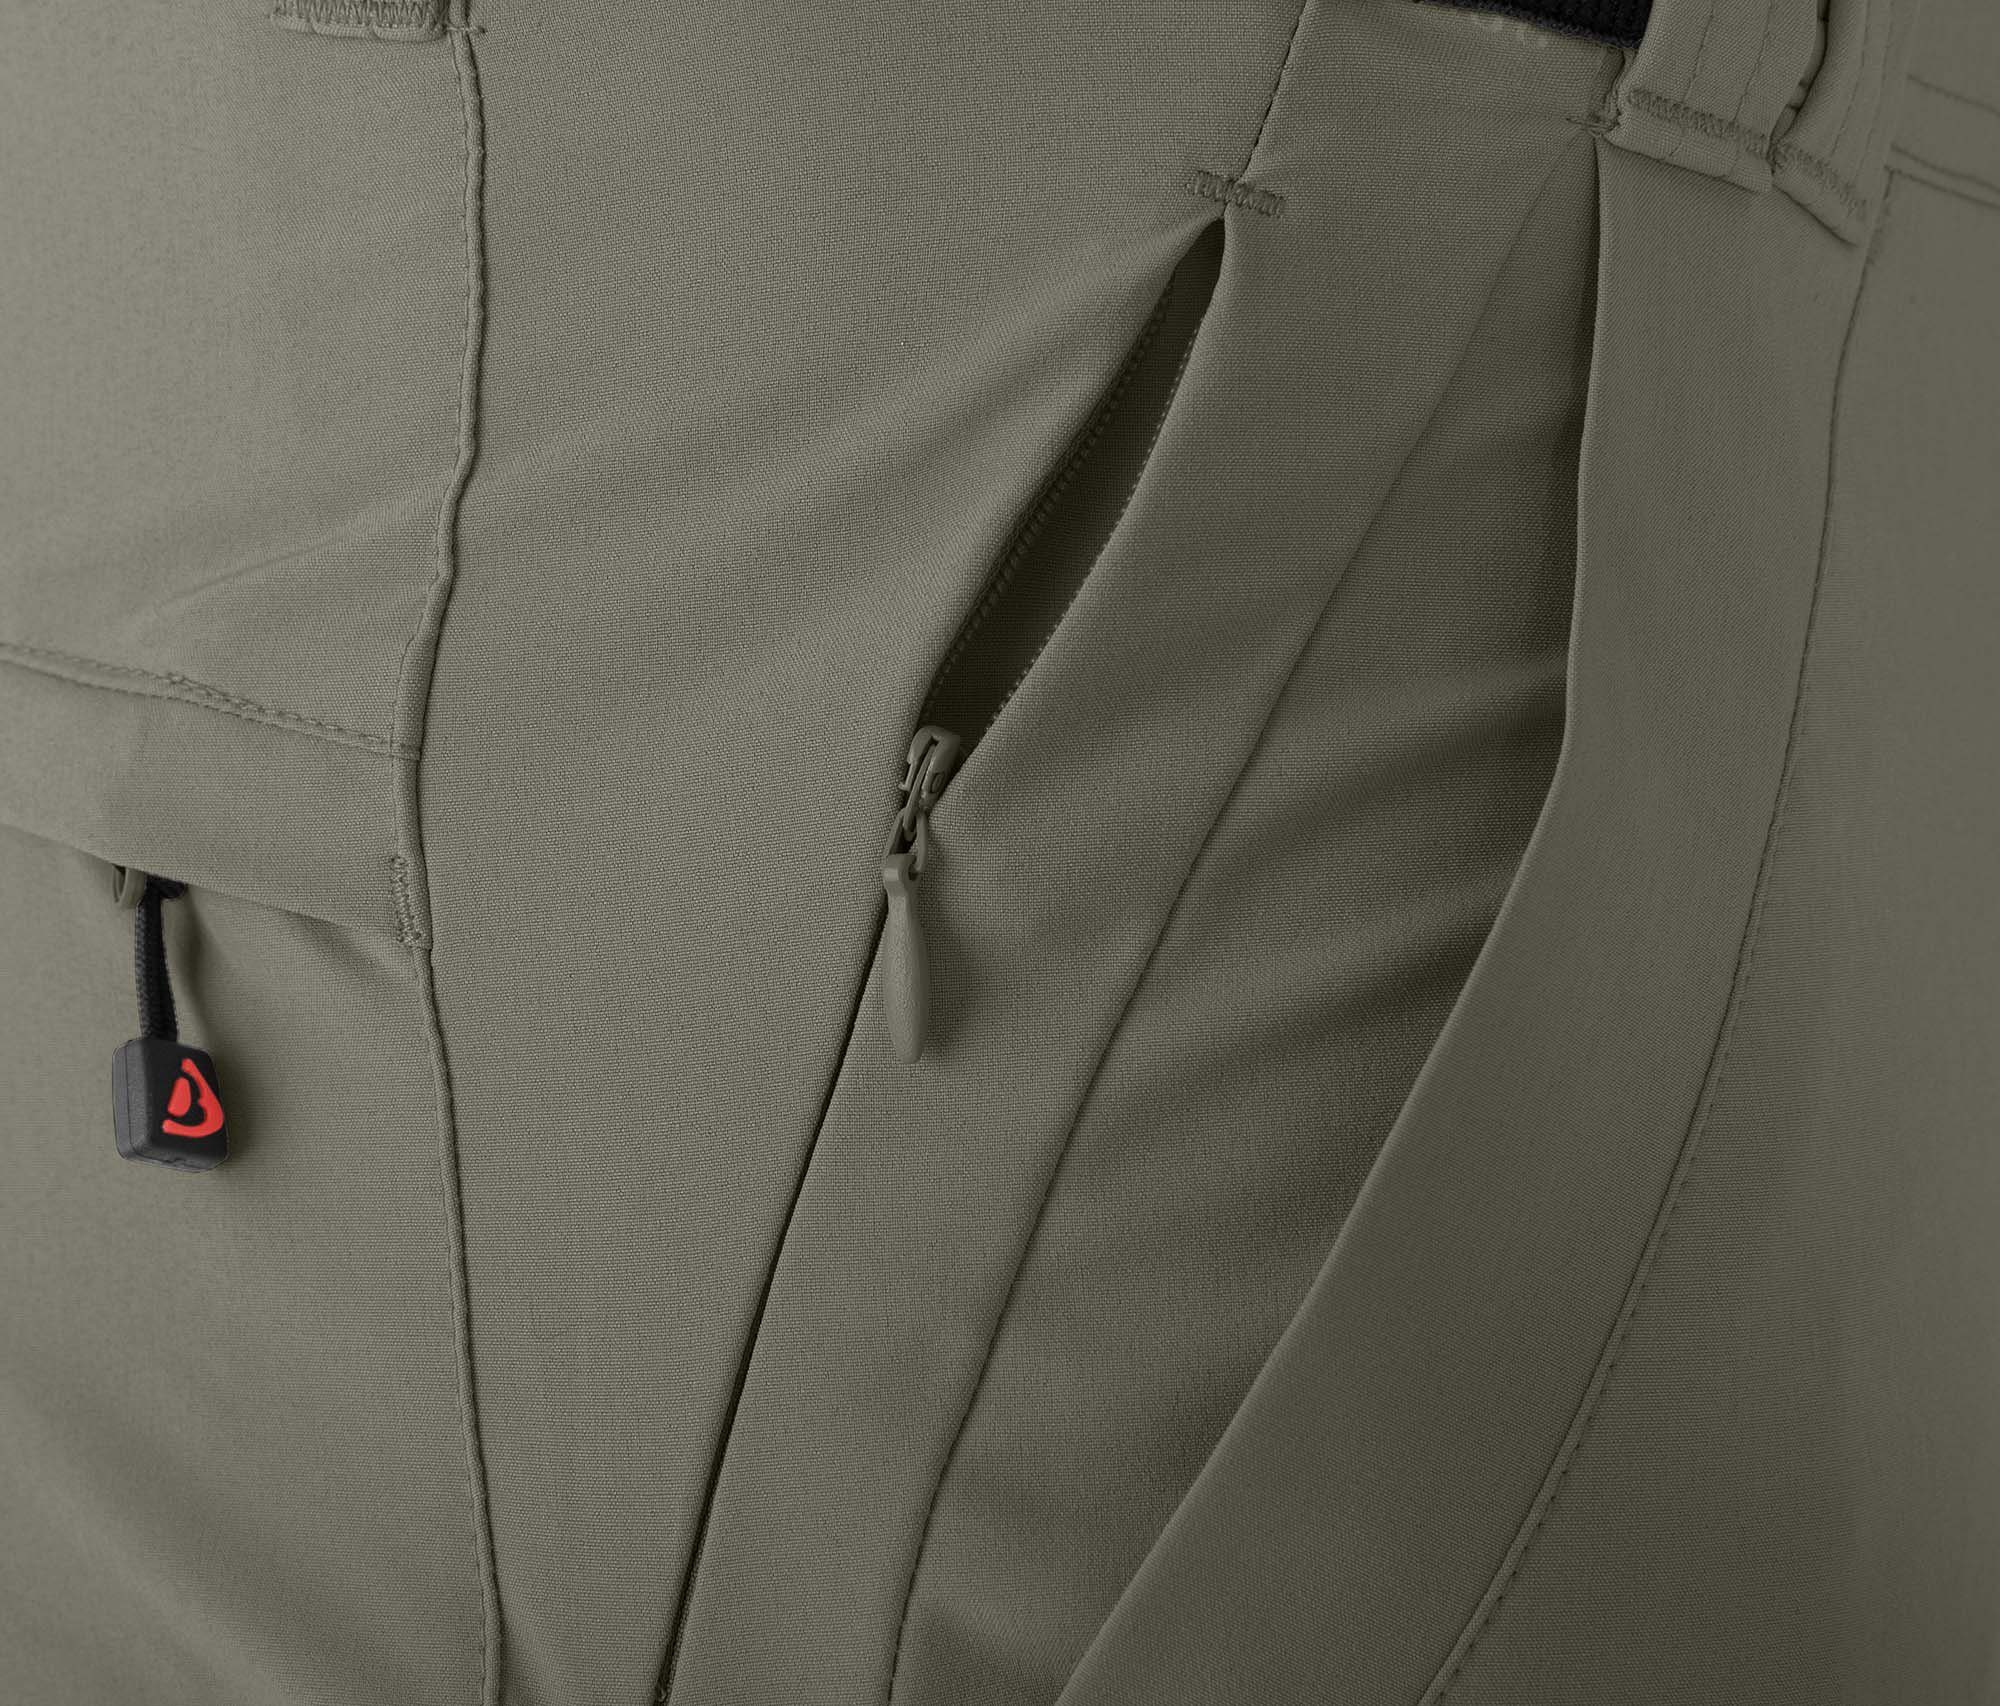 Bermuda Herren elastisch, Taschen, Wanderhose, Bergson Zipp-Off Zip-off-Hose FROSLEV grau/grün recycelt, Normalgrößen, 8